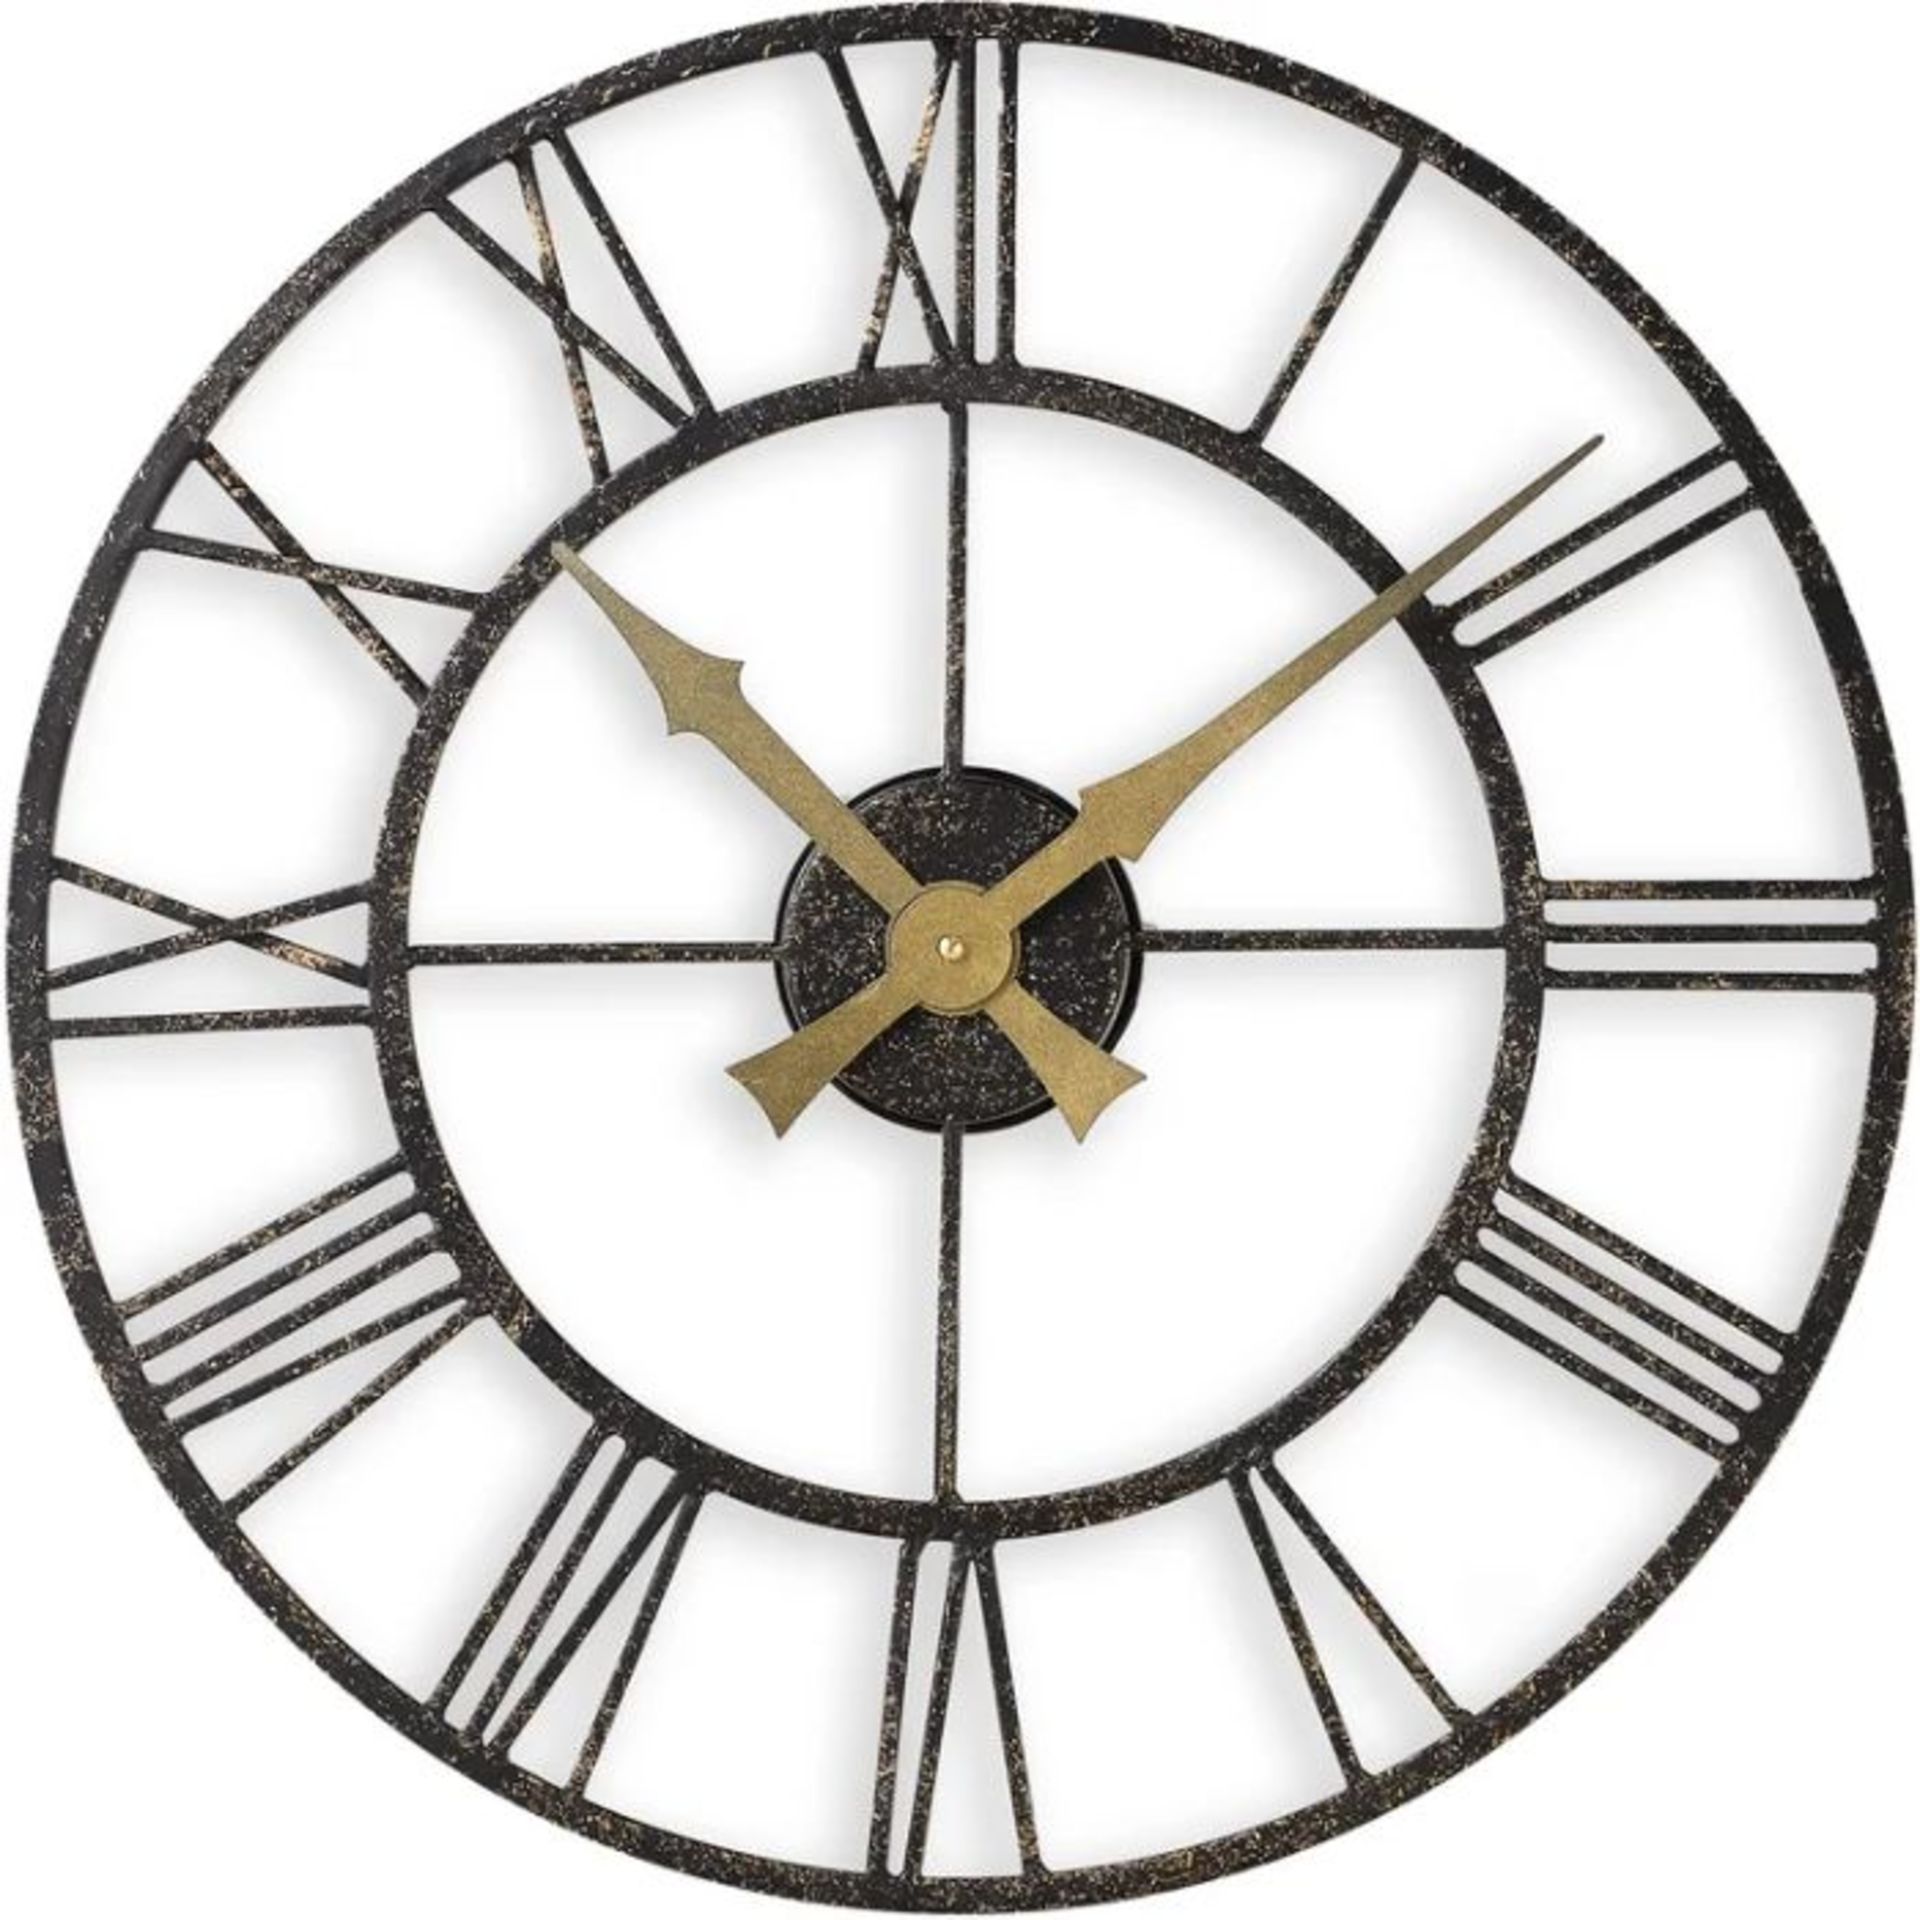 Wrought Studio, Orian 50cm Metal Wall Clock (ANTIQUE BLACK & GOLD FINISH) - RRP £48.99(RLS1061 -